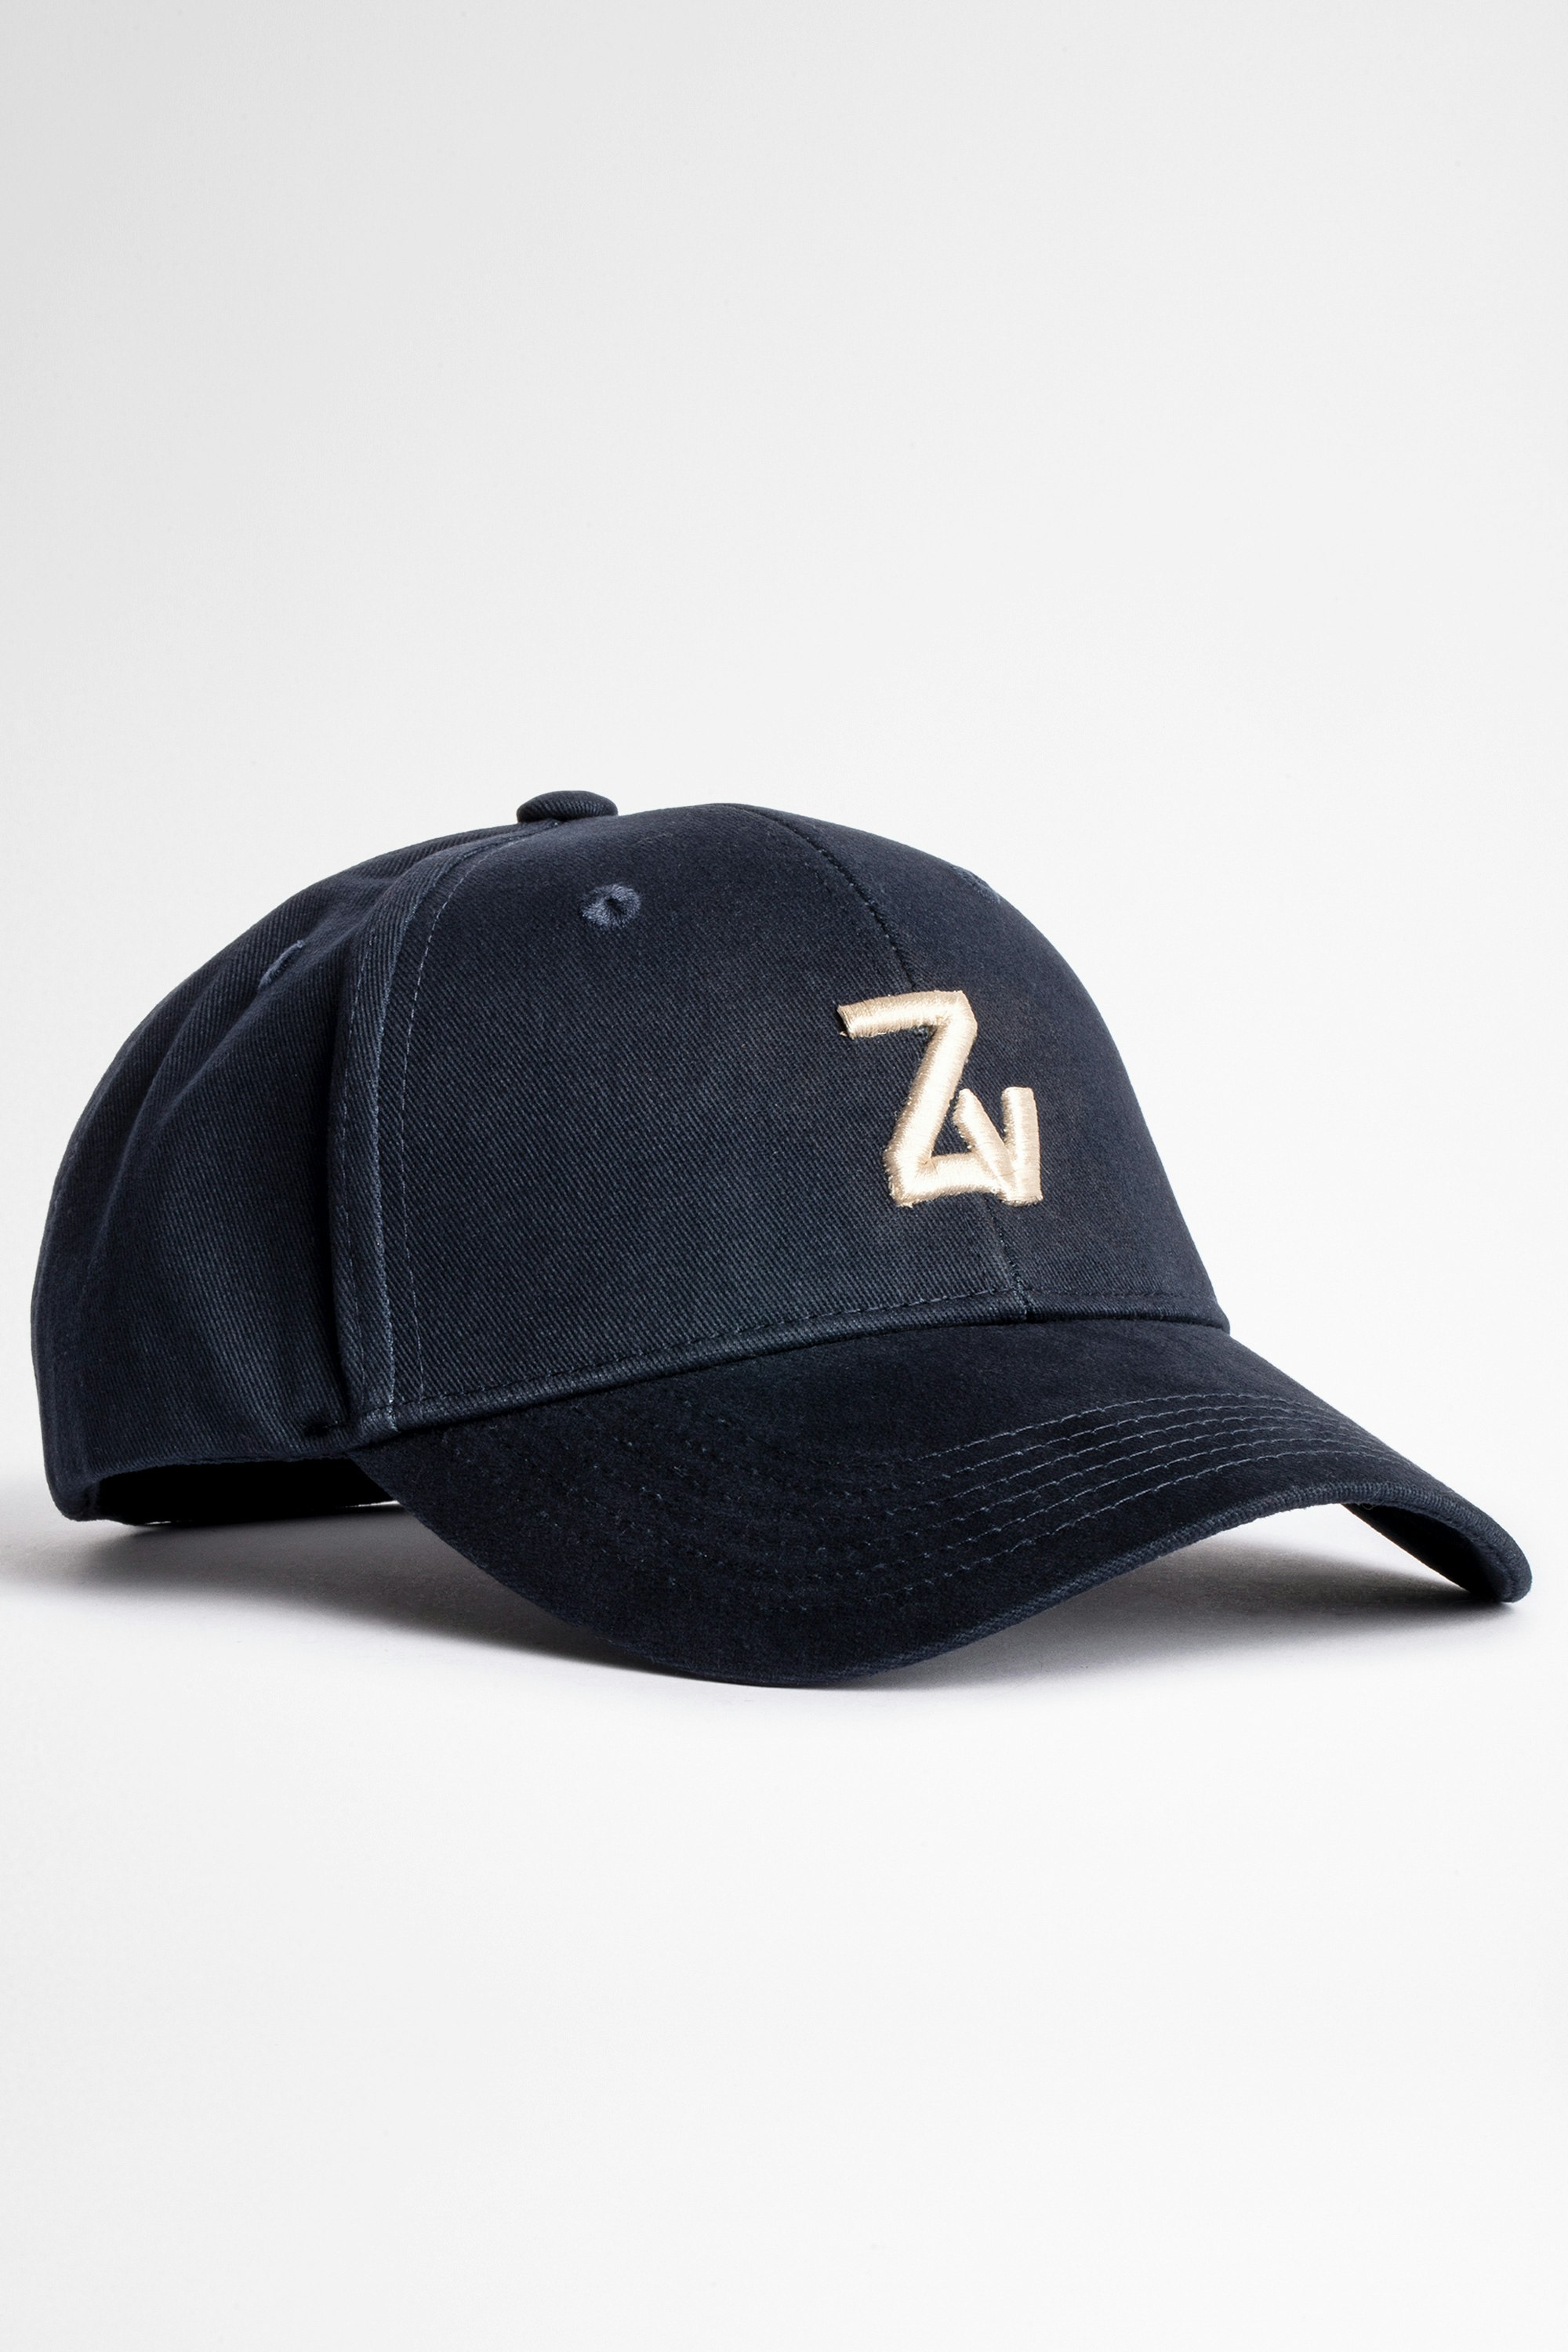 ZV Initiale Klelia Cap Men’s ZV Initiale navy blue embroidered cap